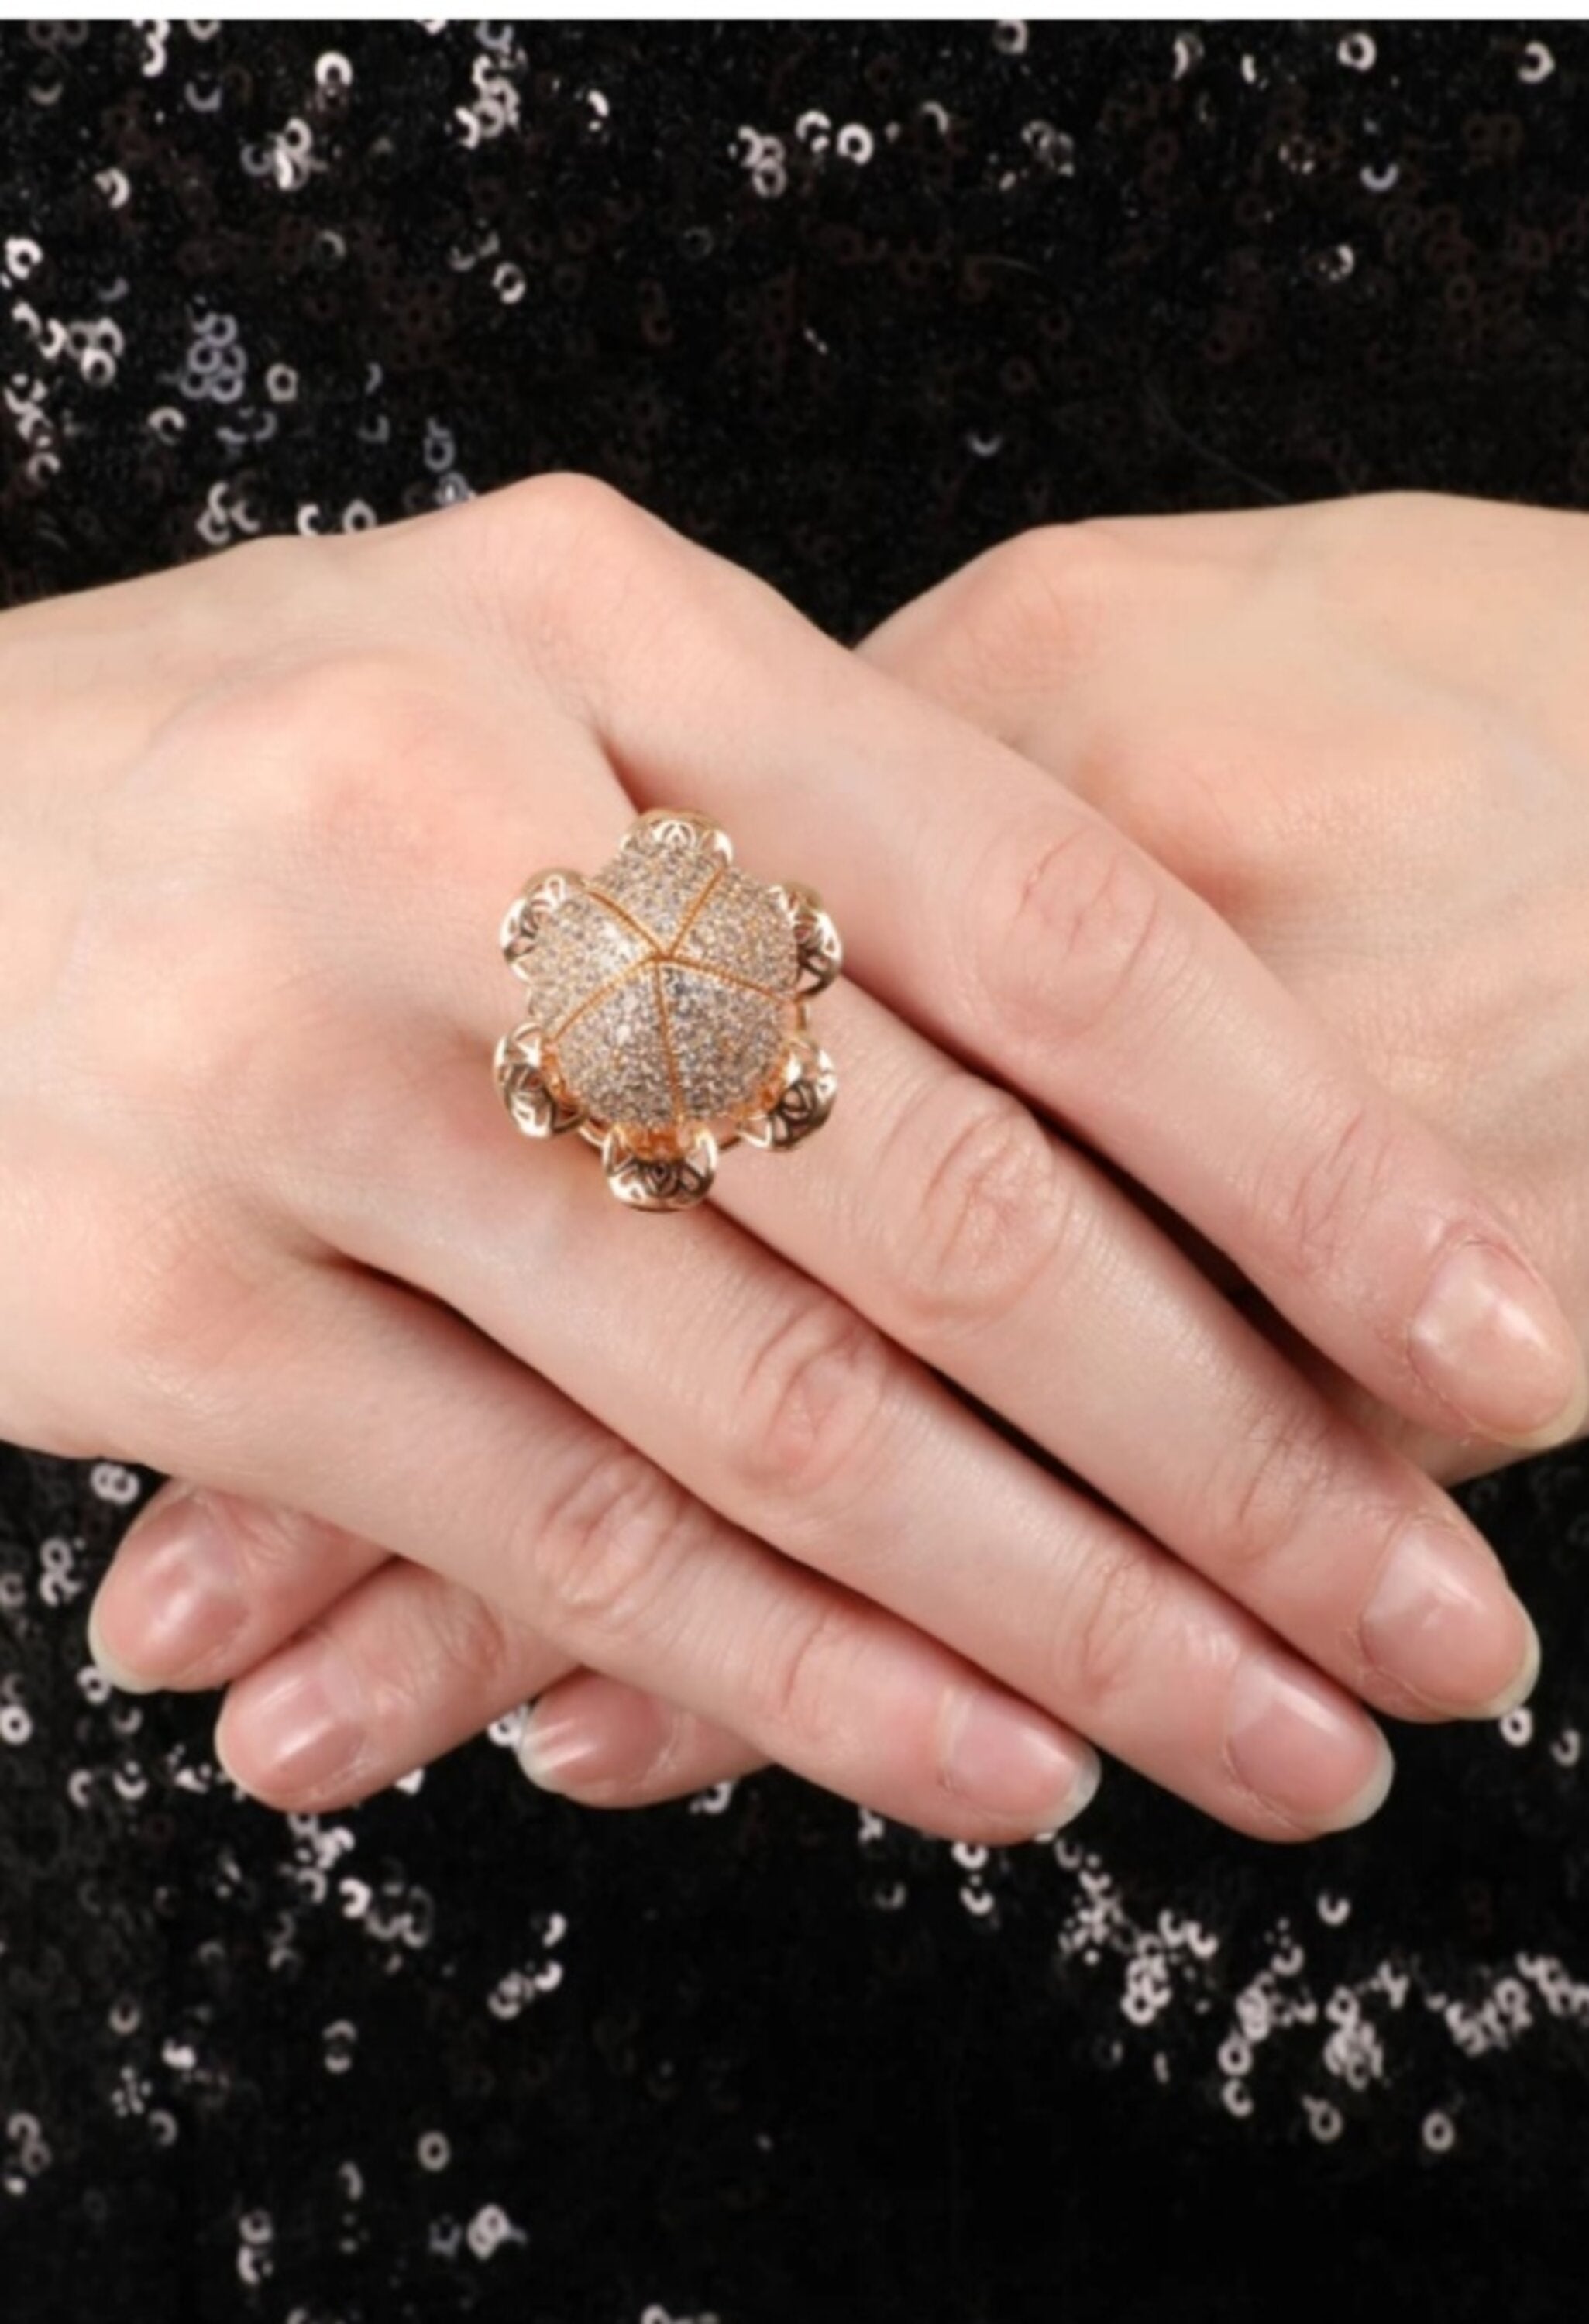 Women's American Diamond Gold-Plated Lotus Ring - Kamal Johar